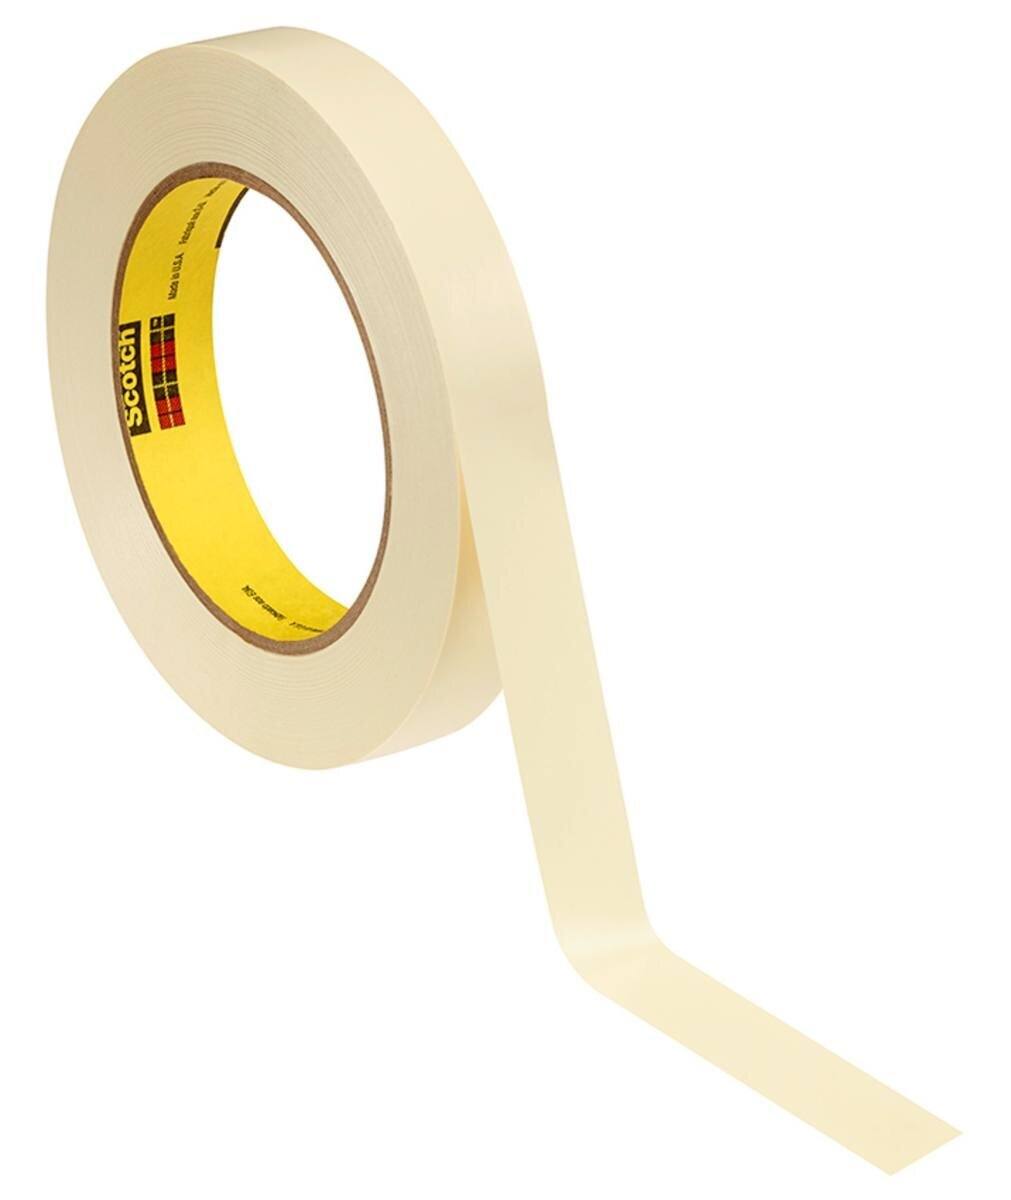 3M Electroplating tape soft PVC 470, yellow, 19 mm x 33 m, 0.18 mm